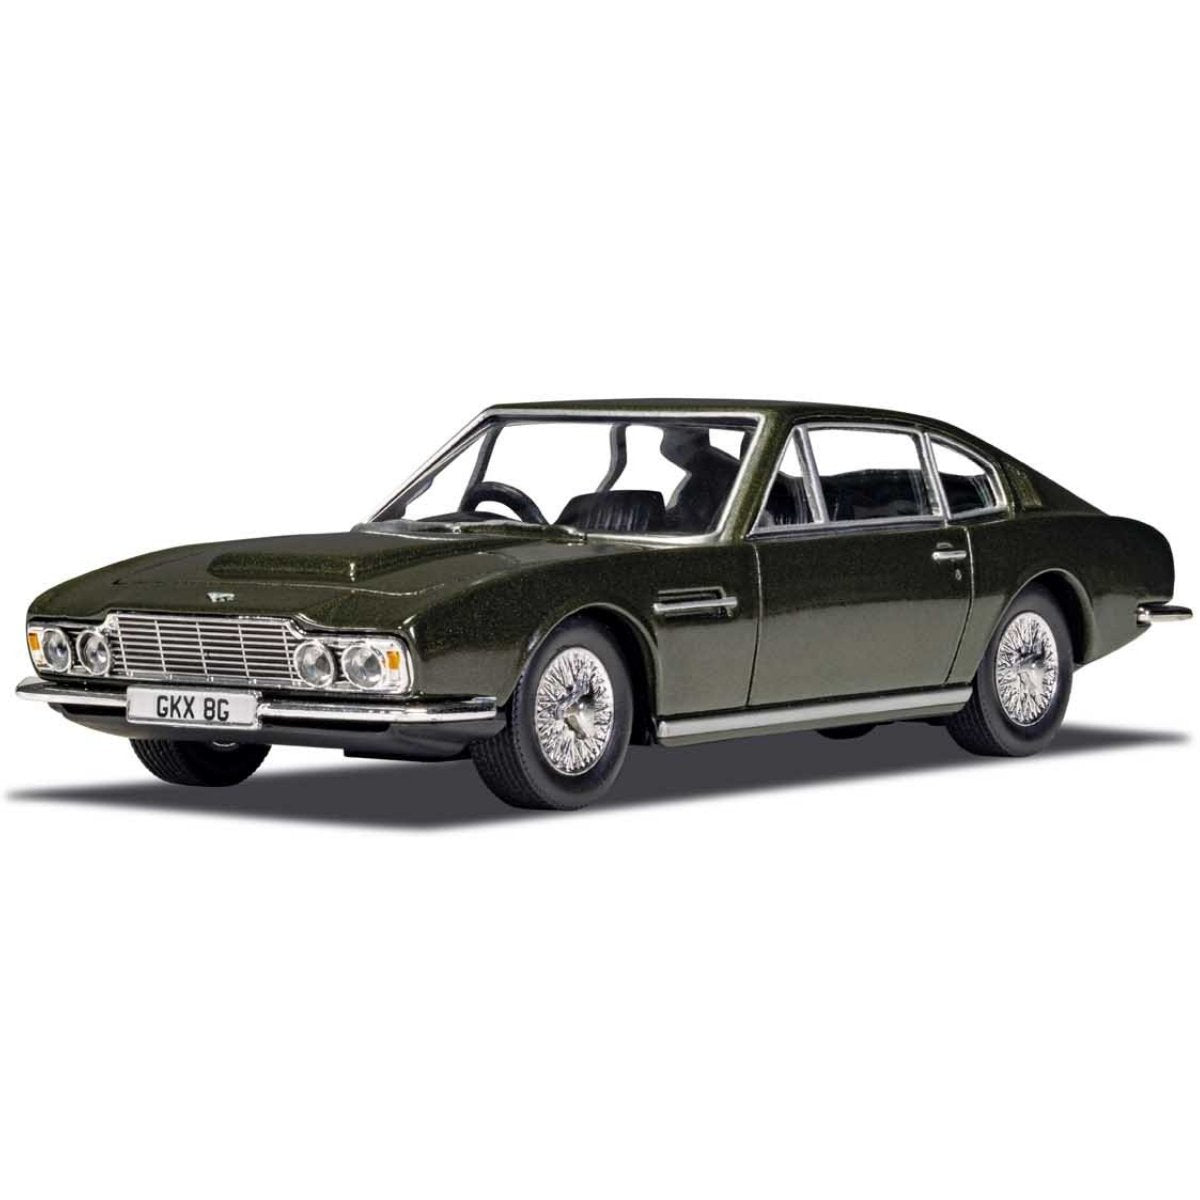 Corgi CC03804 James Bond Aston Martin DBS - 'Her Majesty's Secret Service' - Phillips Hobbies